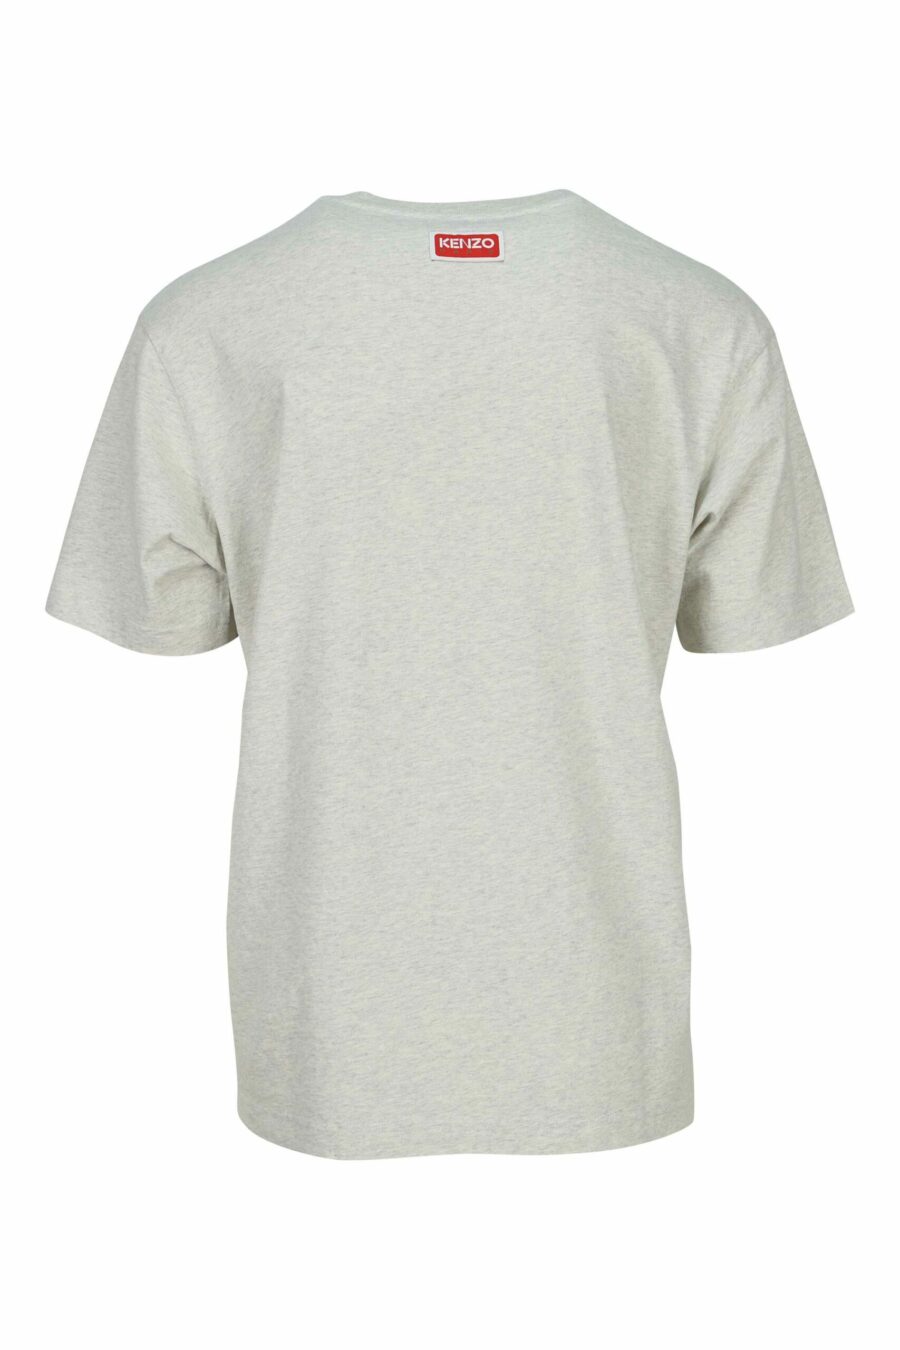 Camiseta gris con maxilogo tigre - 3612230627857 1 scaled